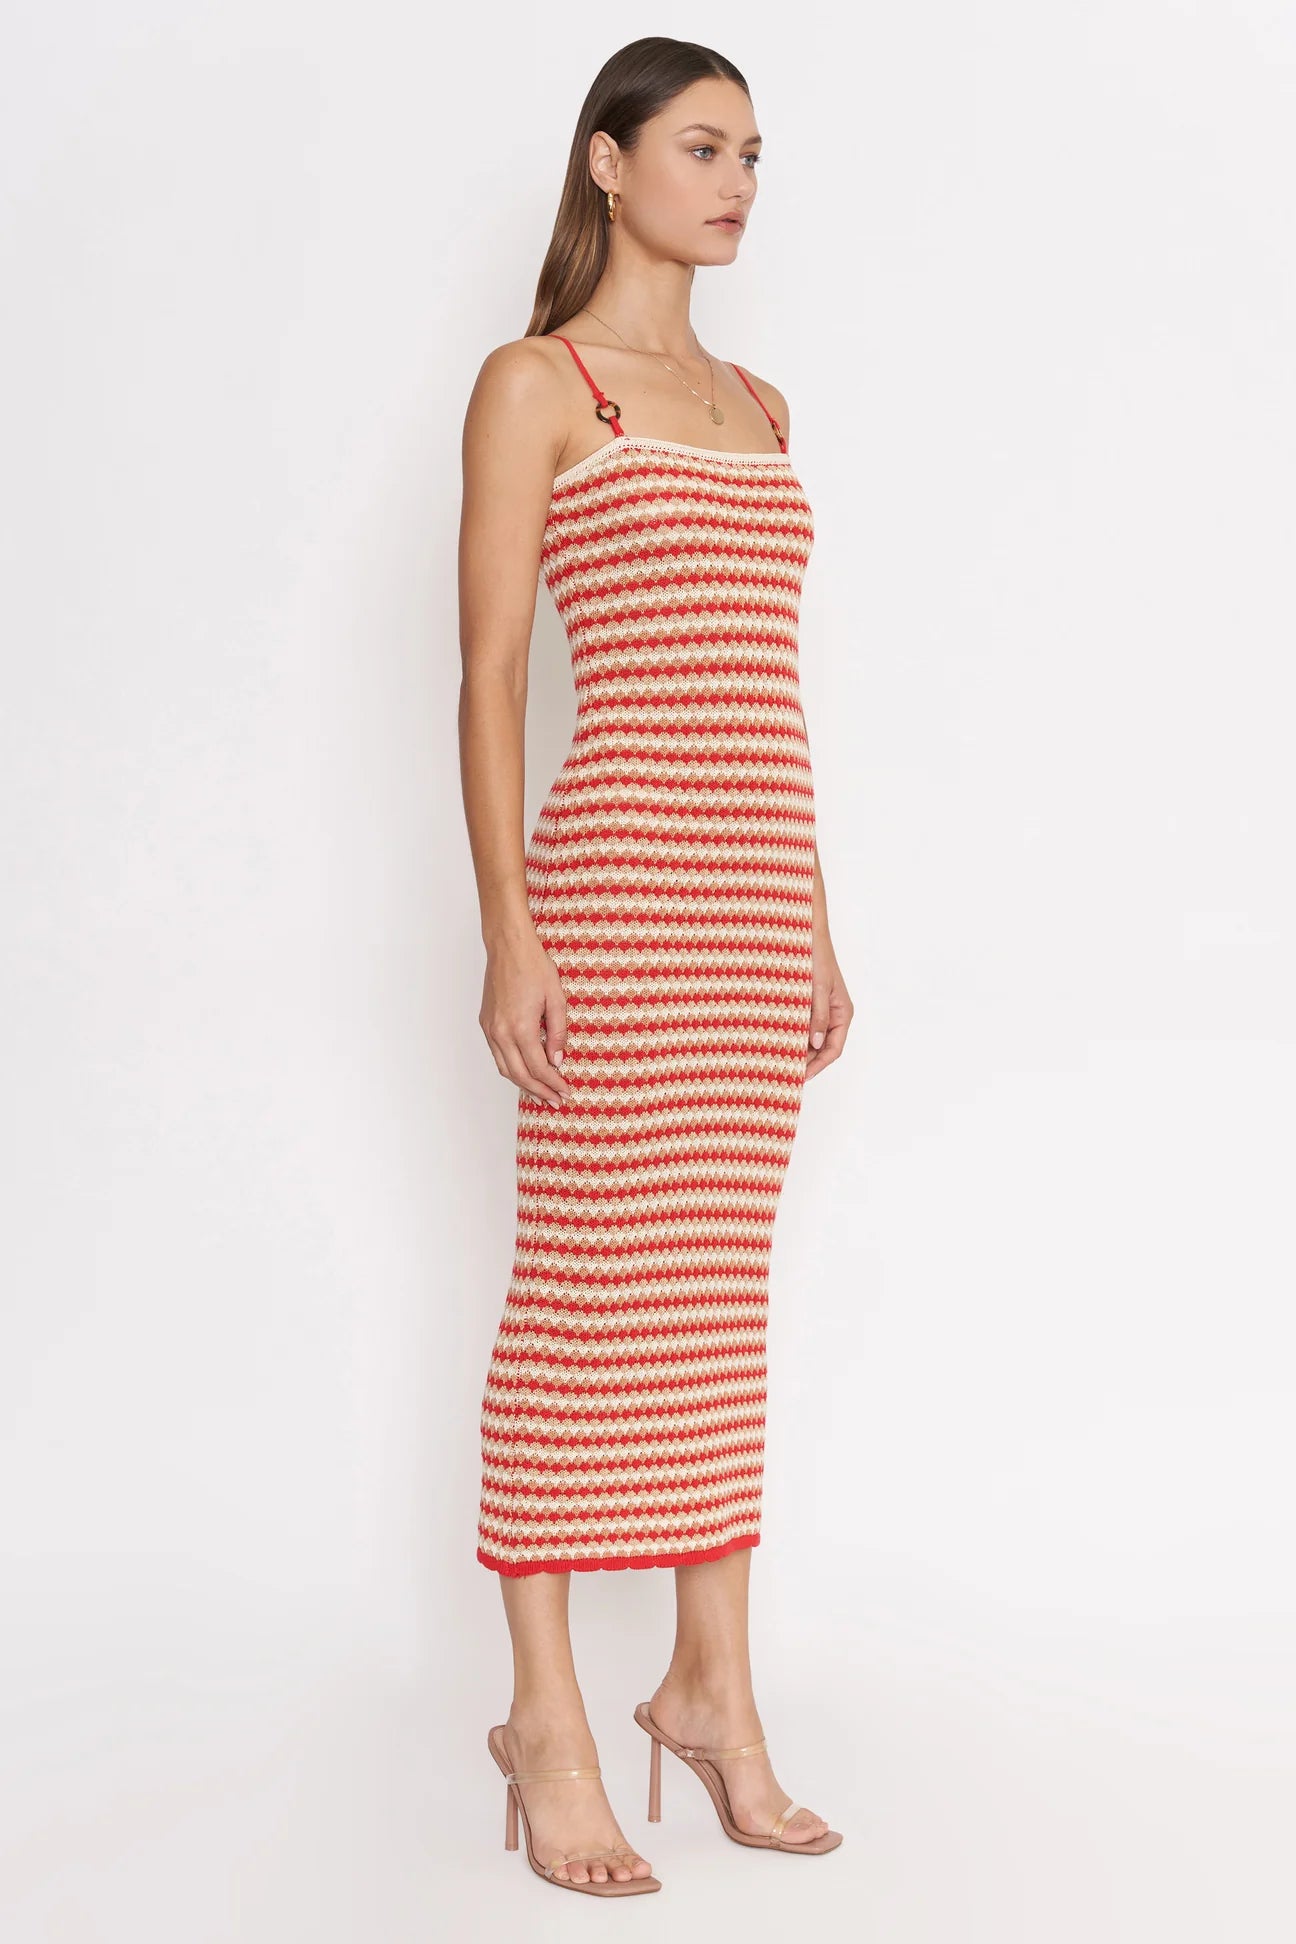 Knit Stripe Dress